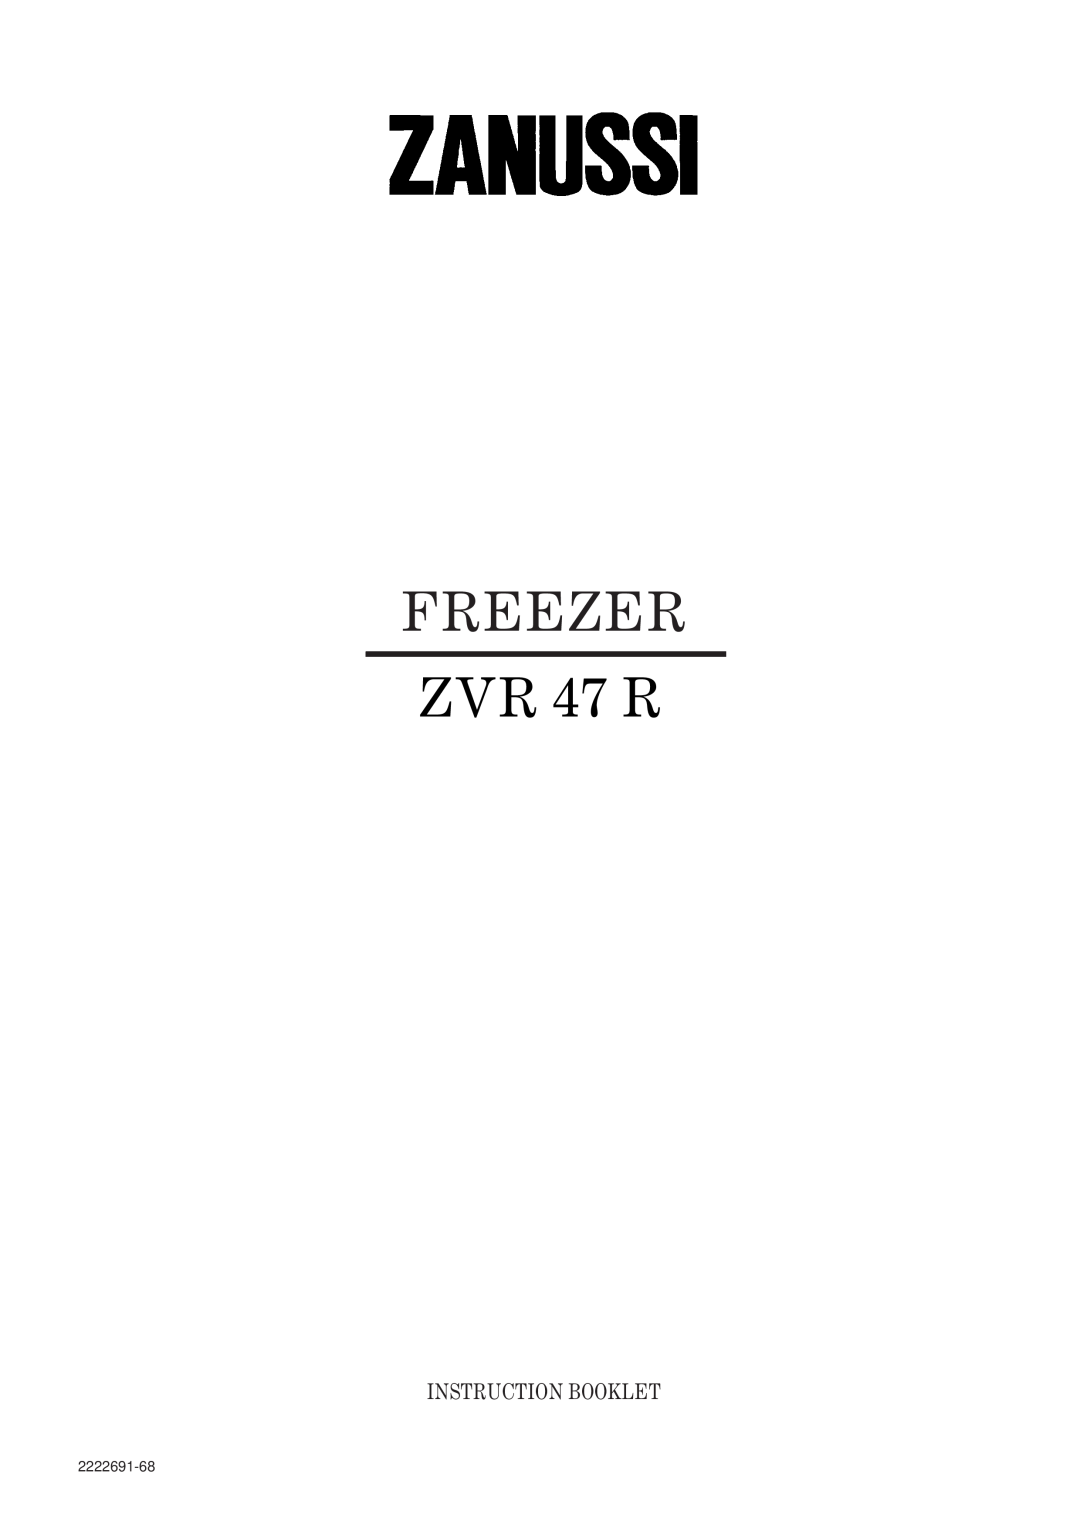 Zanussi manual FREEZER ZVR 47 R, Instruction Booklet, 2222691-68 